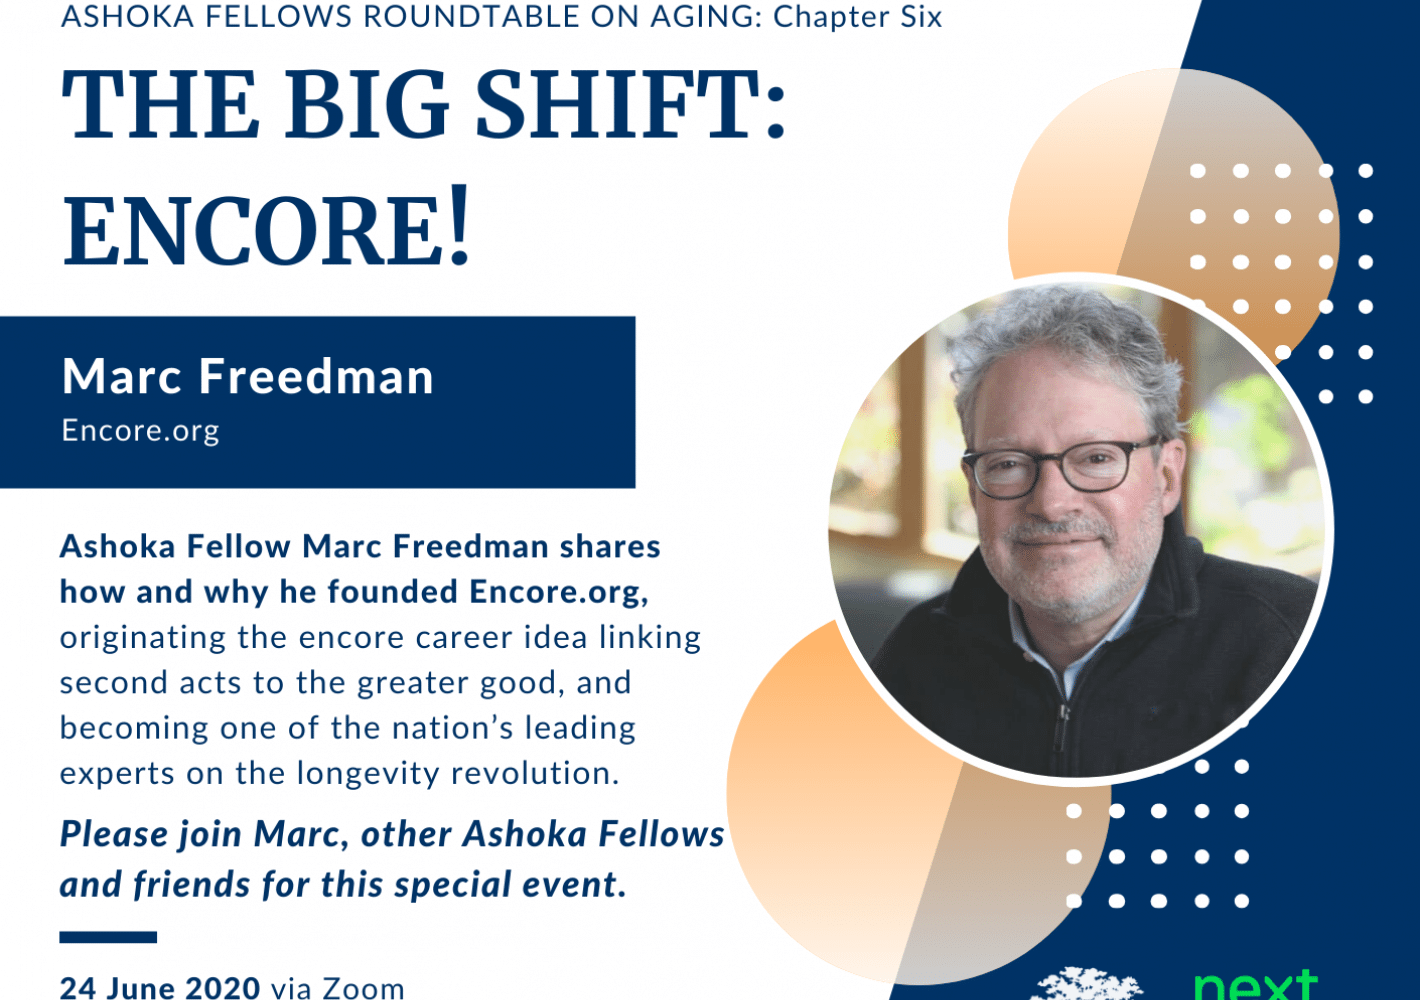 Ashoka Fellows Roundtable on Aging Chapter 6, Marc Freedman: The Big Shift